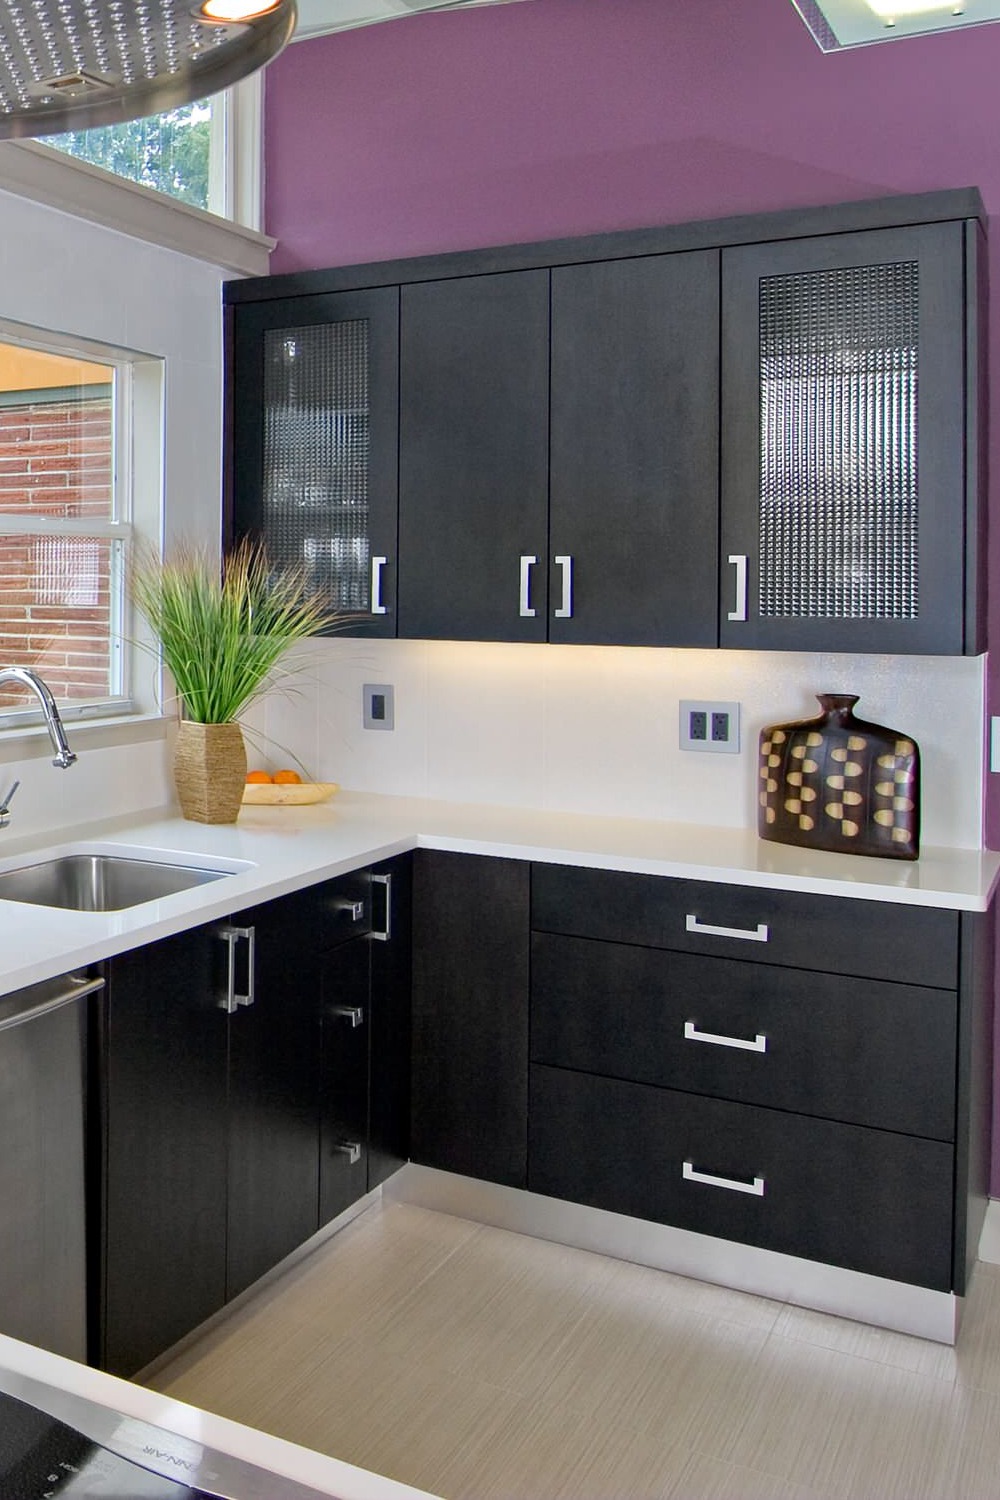 White Quartz Countertops Black Charcoal Flat Panel Cabinets Backsplash Beige Floor Tiles